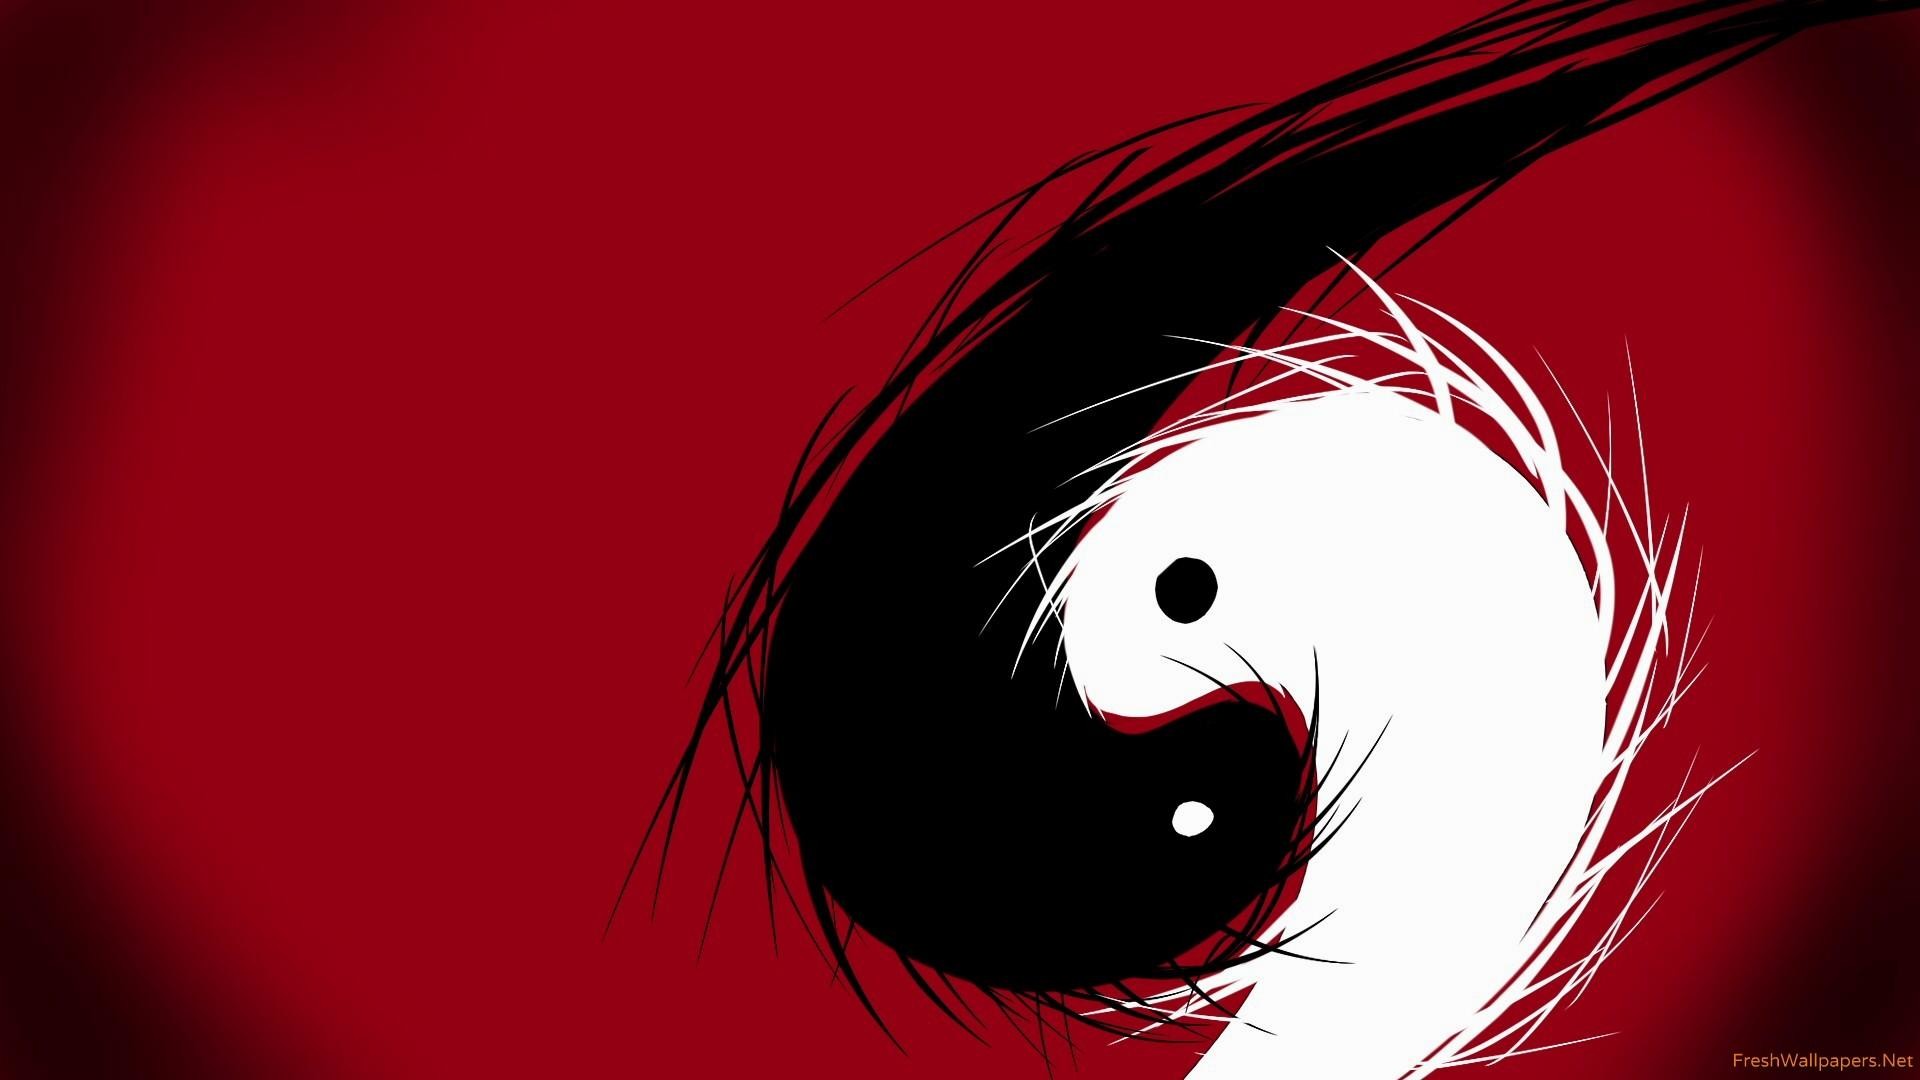 papel pintado ying yang,rojo,cara,negro,ojo,dibujos animados